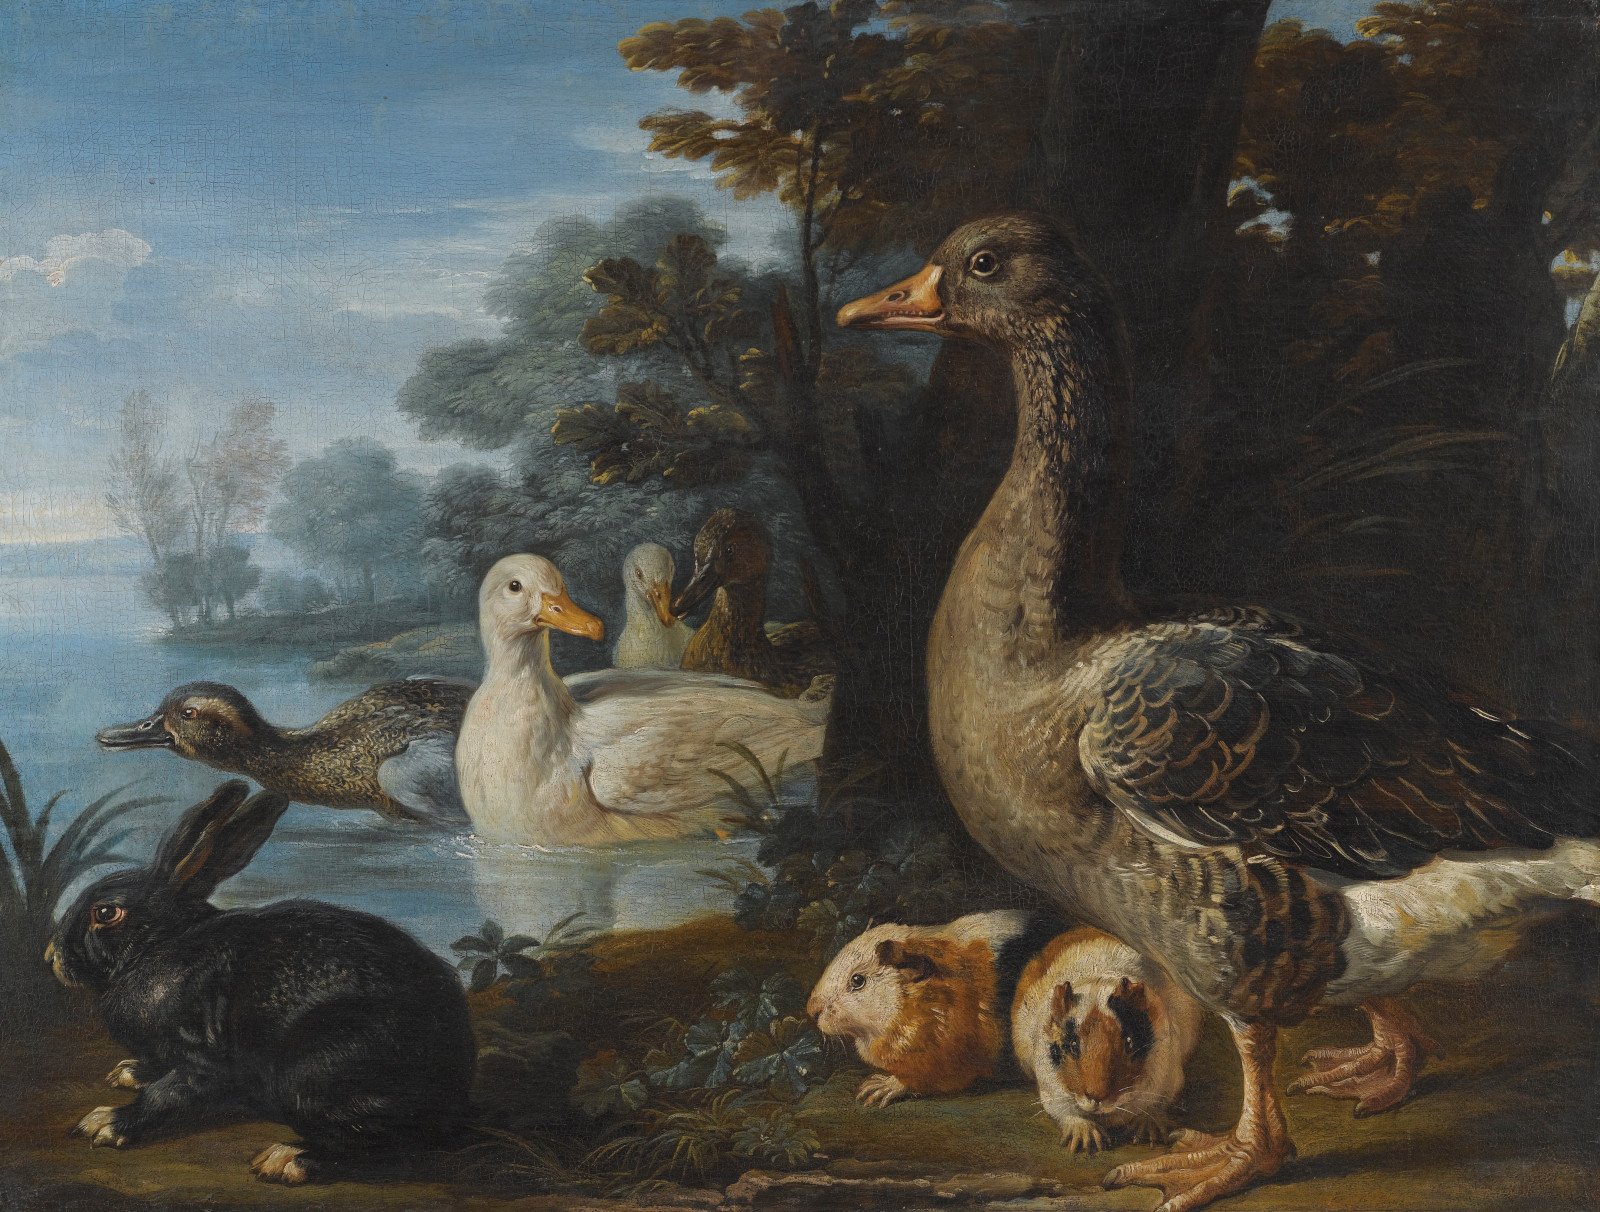 Ducks, Guinea Pigs and a Rabbit in a Wooded Landscape , David de Coninck